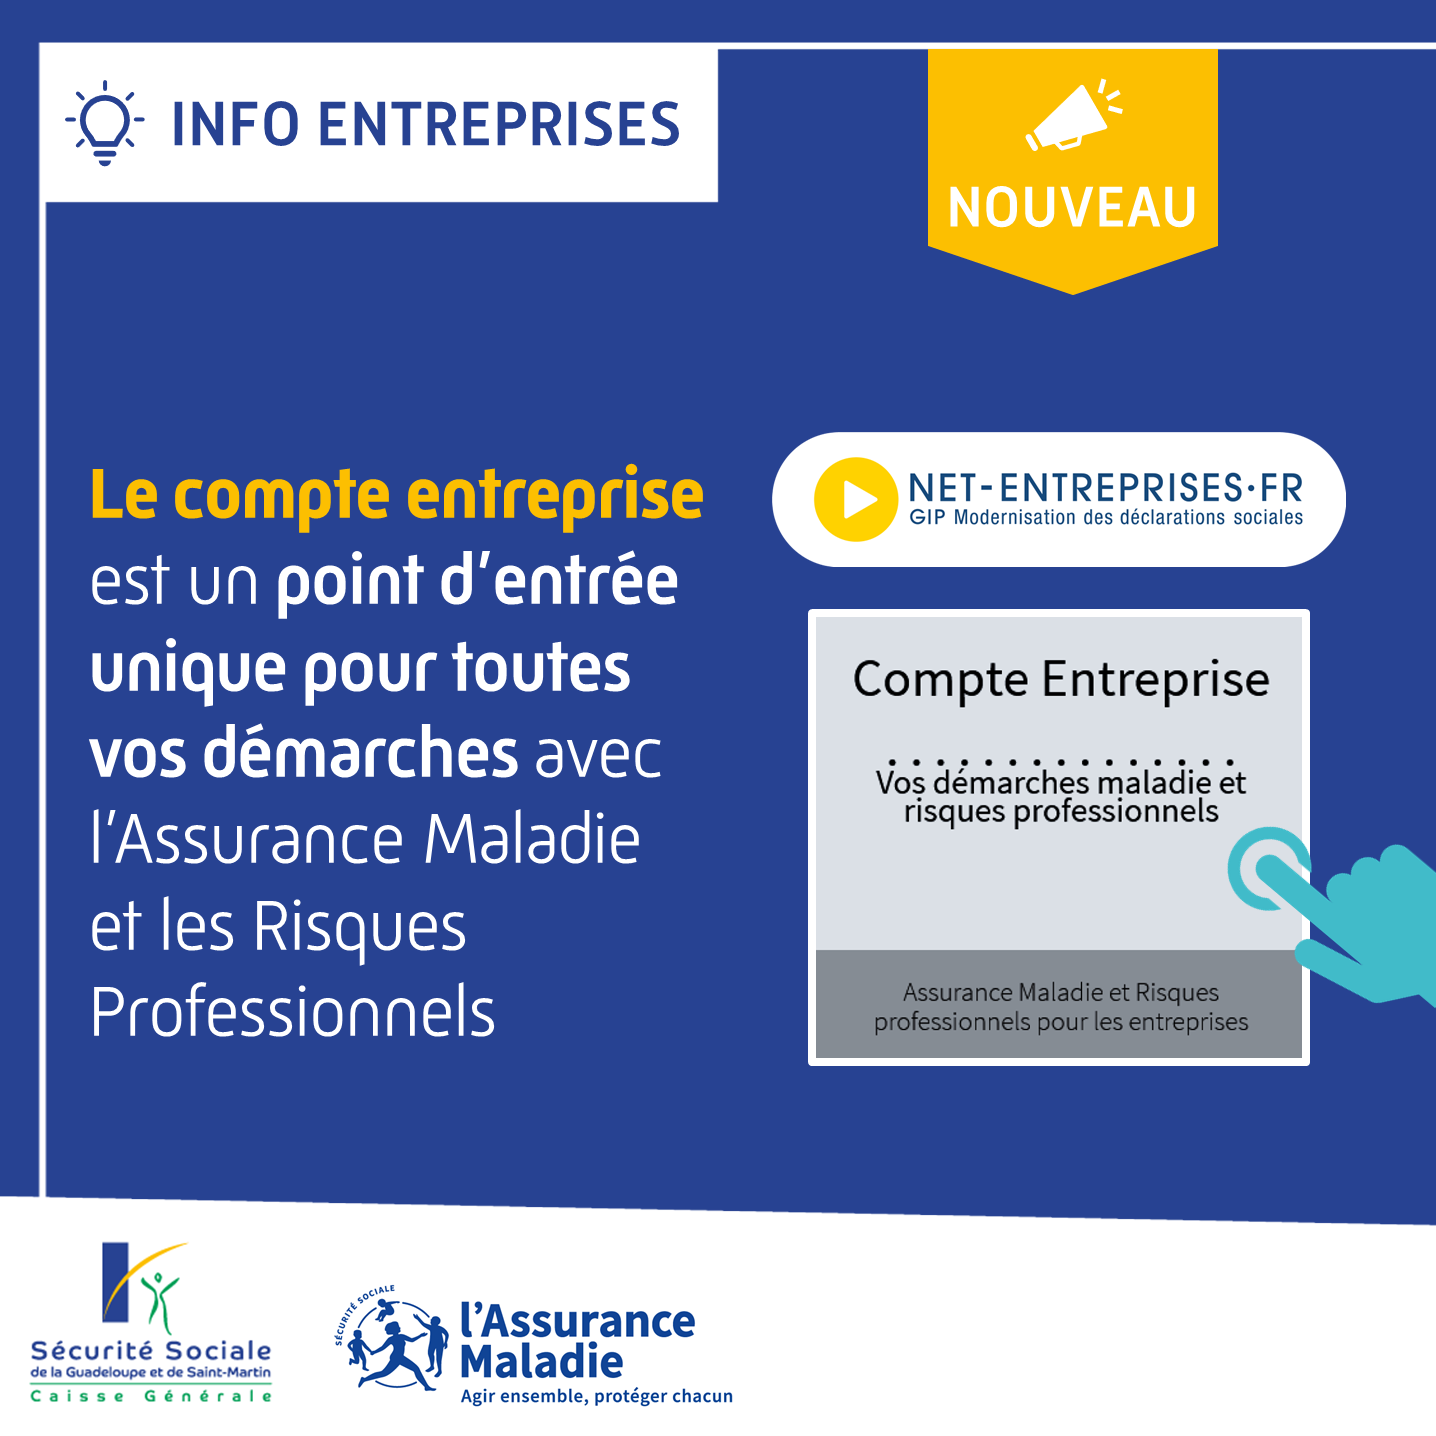 INFO ENTREPRISES : Net-Entreprises.fr